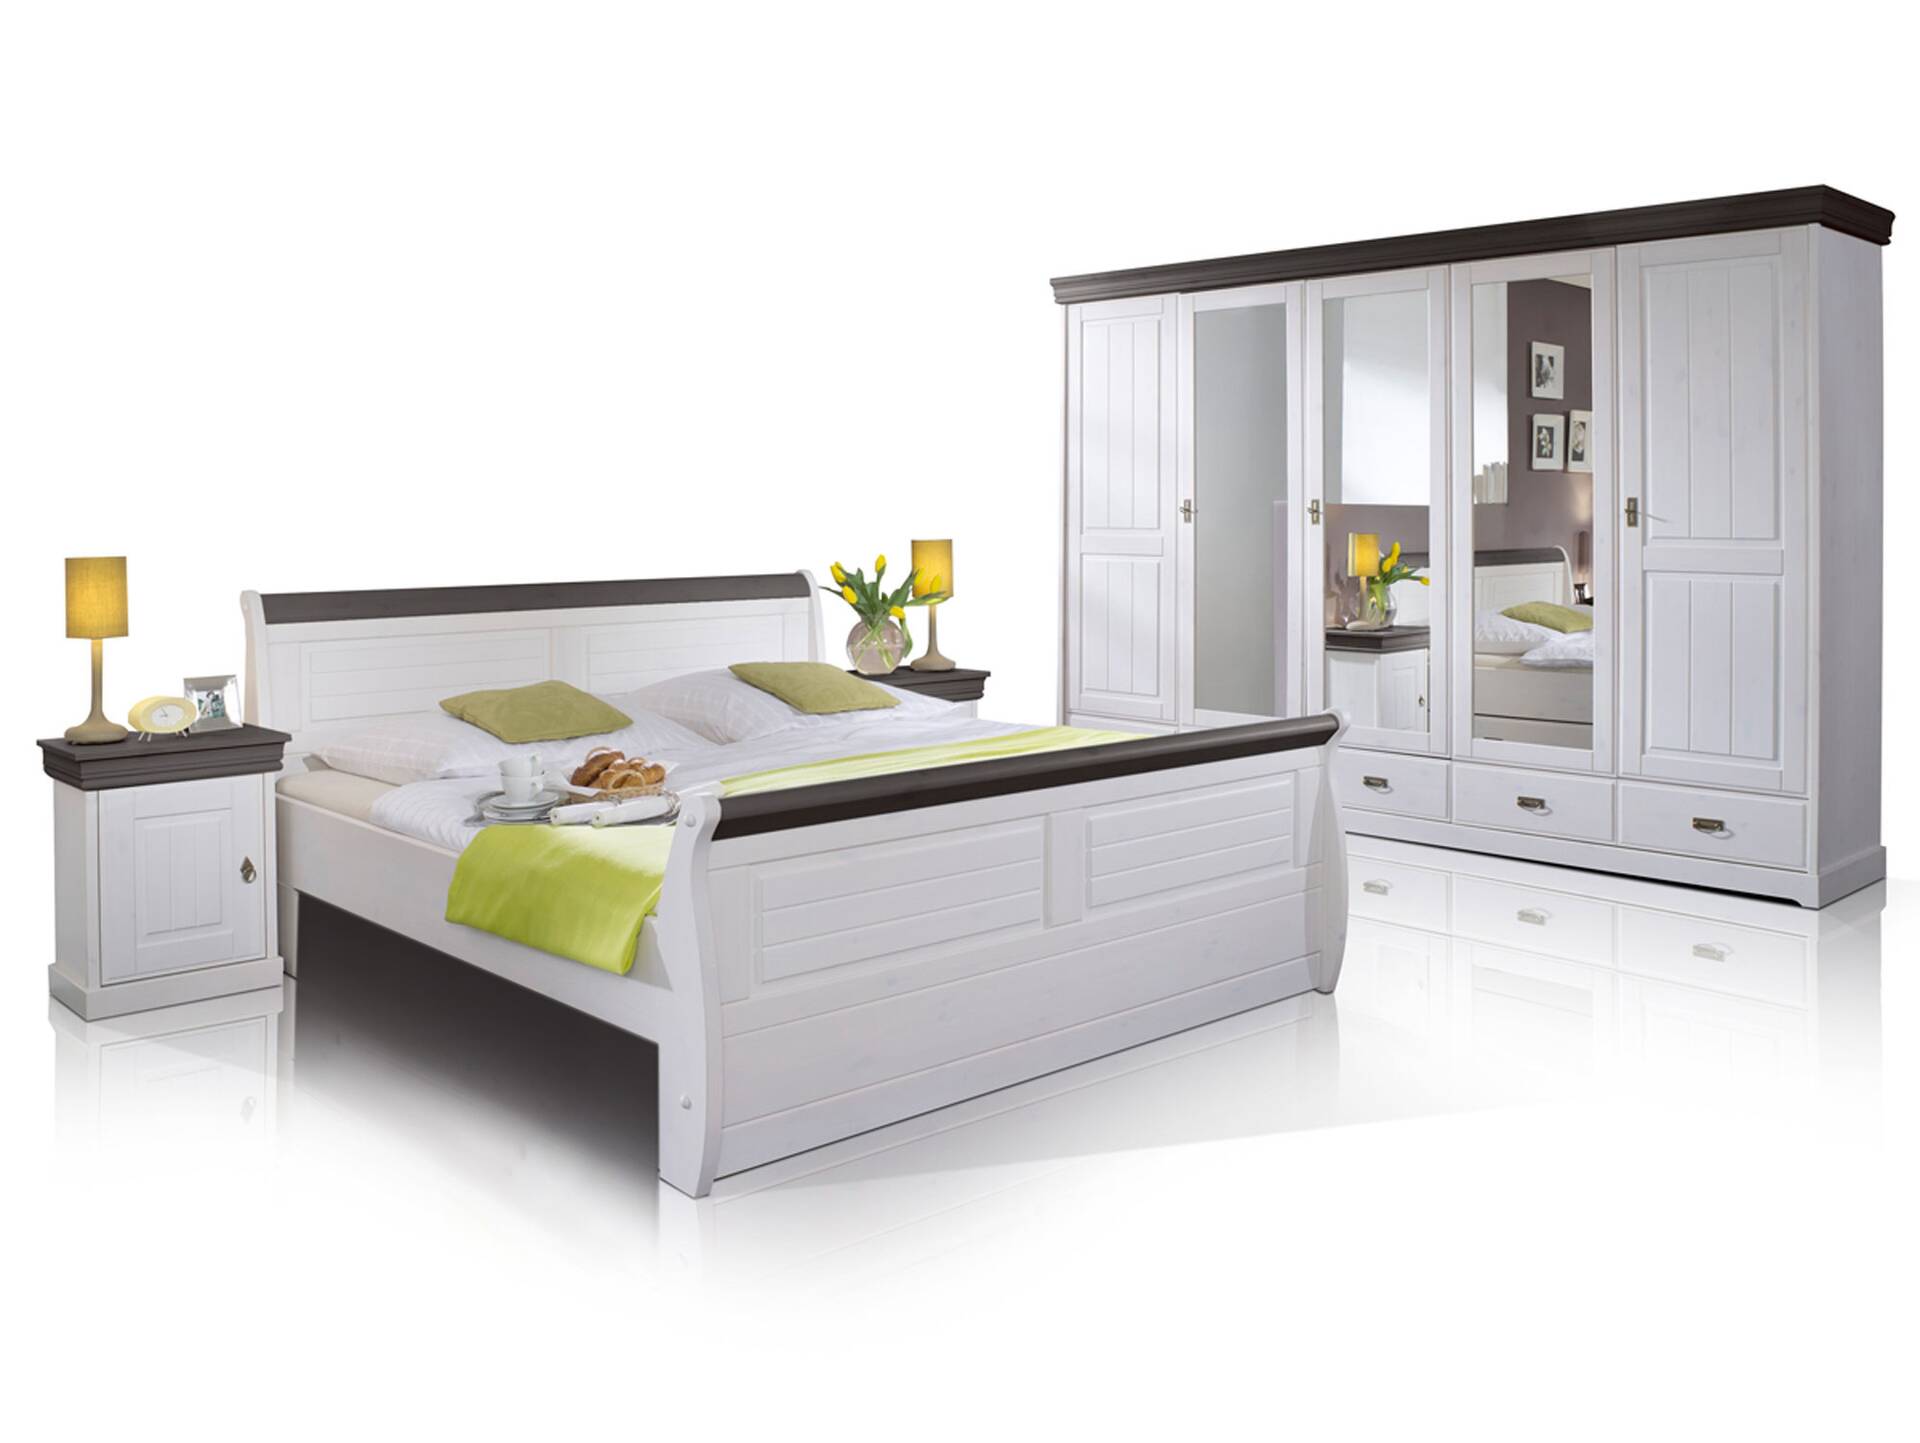 ROMAN Komplett-Schlafzimmer; Material Massivholz, Kiefer weiss/colonialfarbig | ohne Bettkasten